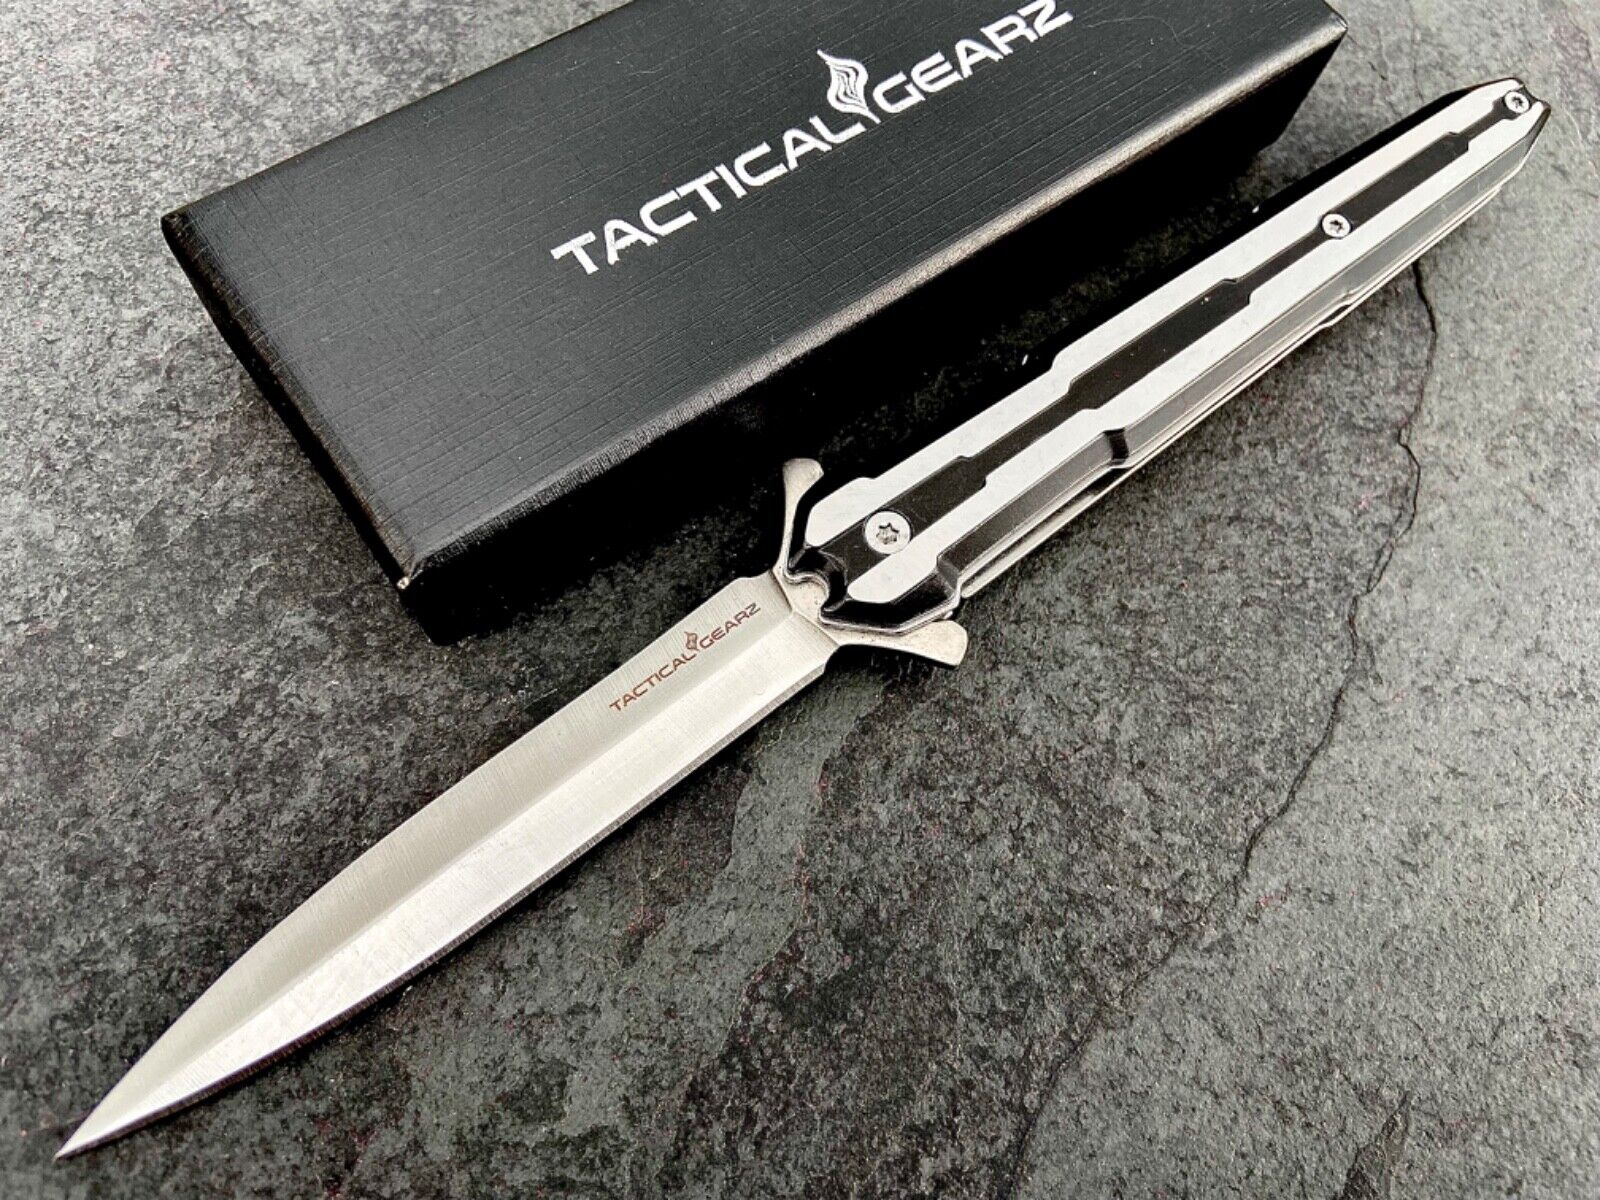 Stainless Steel EDC Pocket Knife Assisted Open Razor Sharp D2 Steel Blade